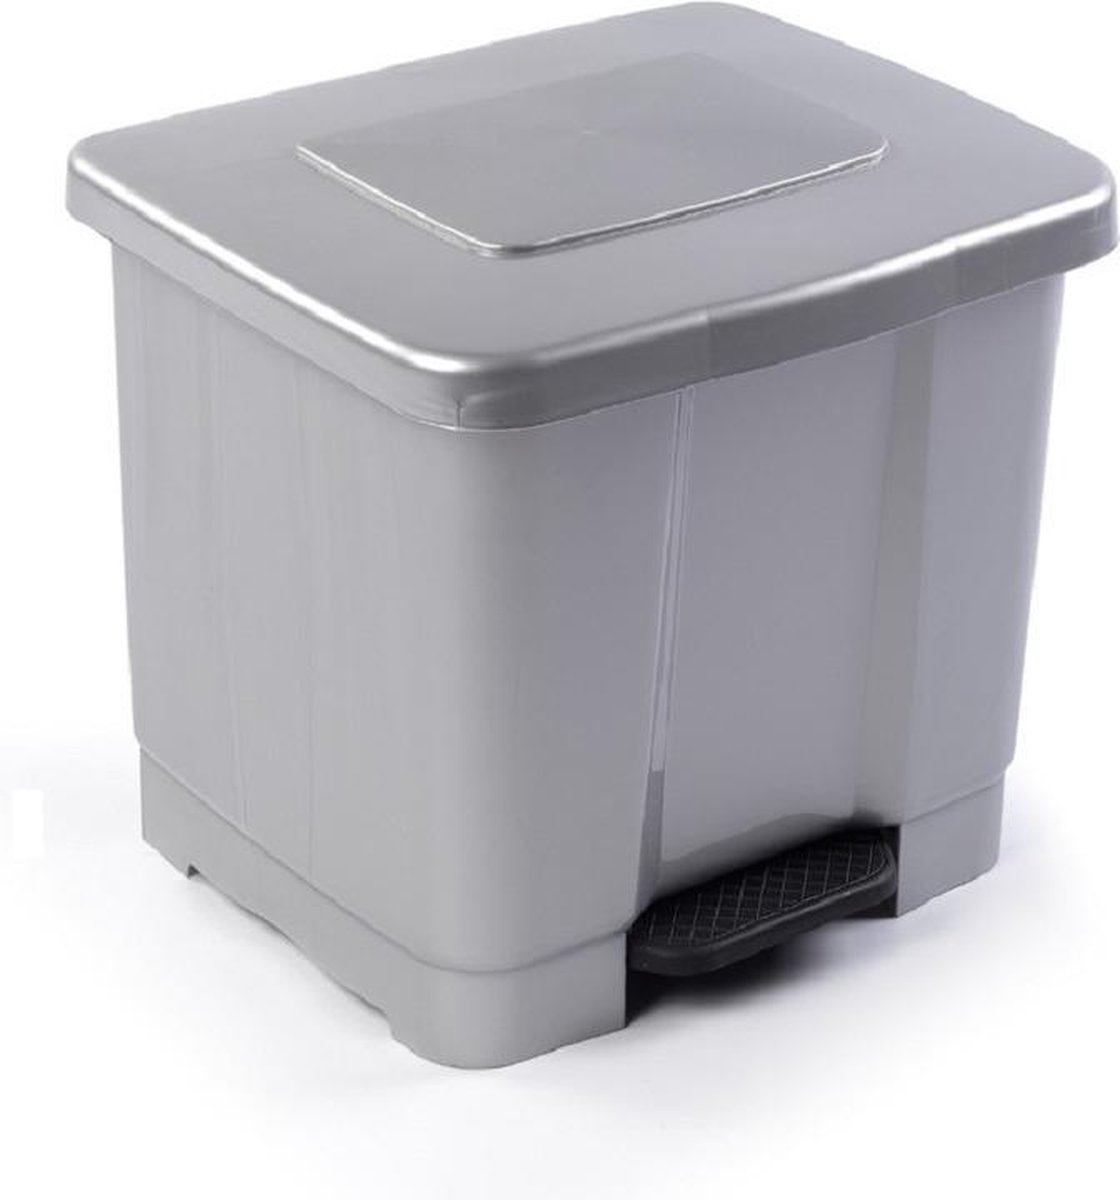 Dubbele afvalemmer/vuilnisemmer 35 liter met deksel en pedaal - Zilver- vuilnisbakken/prullenbakken - Kantoor/keuken